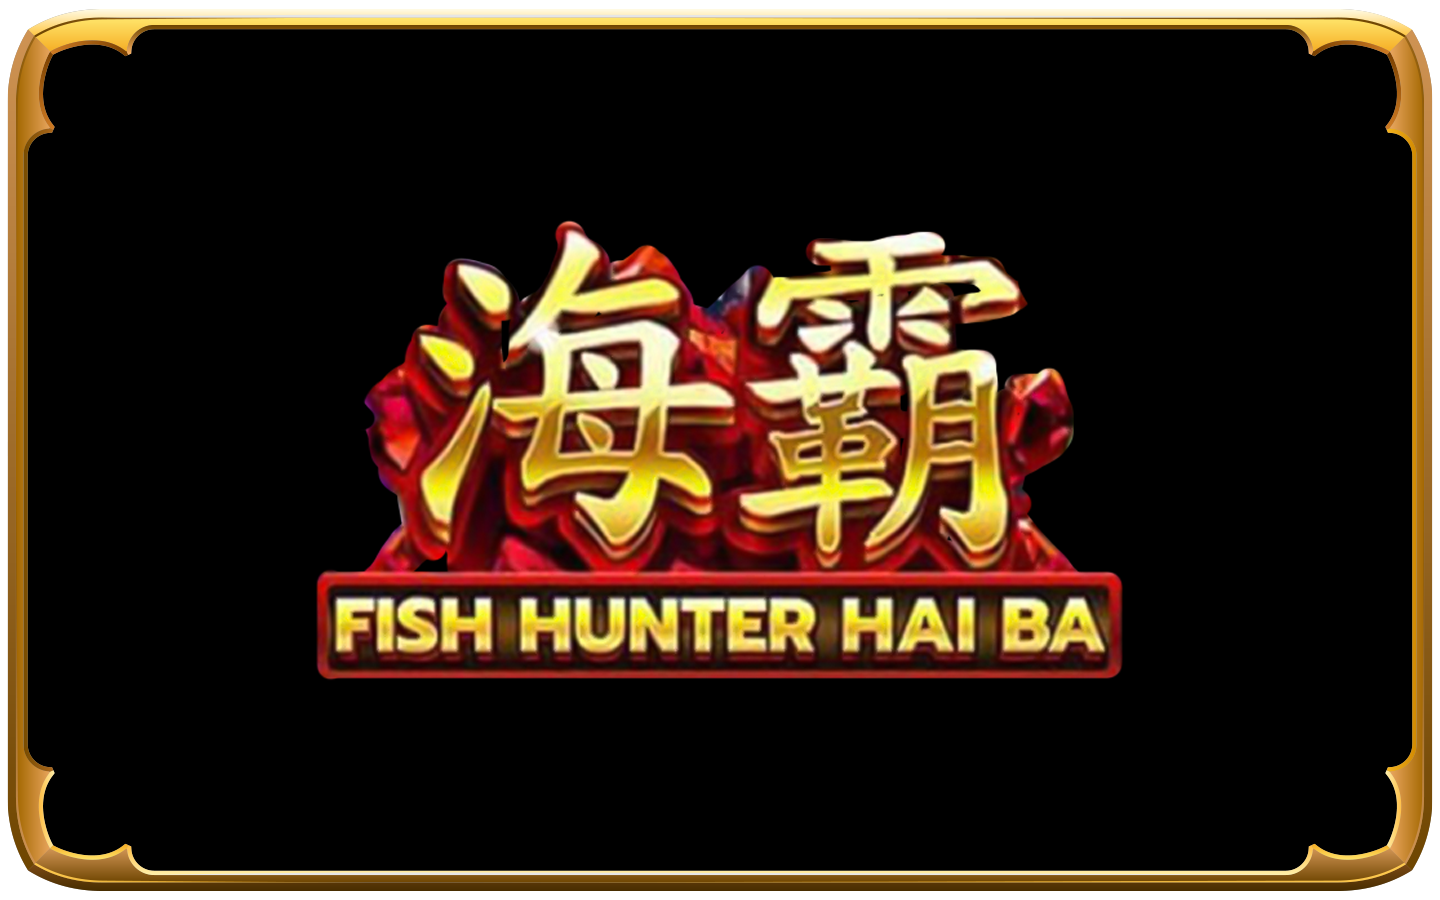 Fish Hunter 海霸